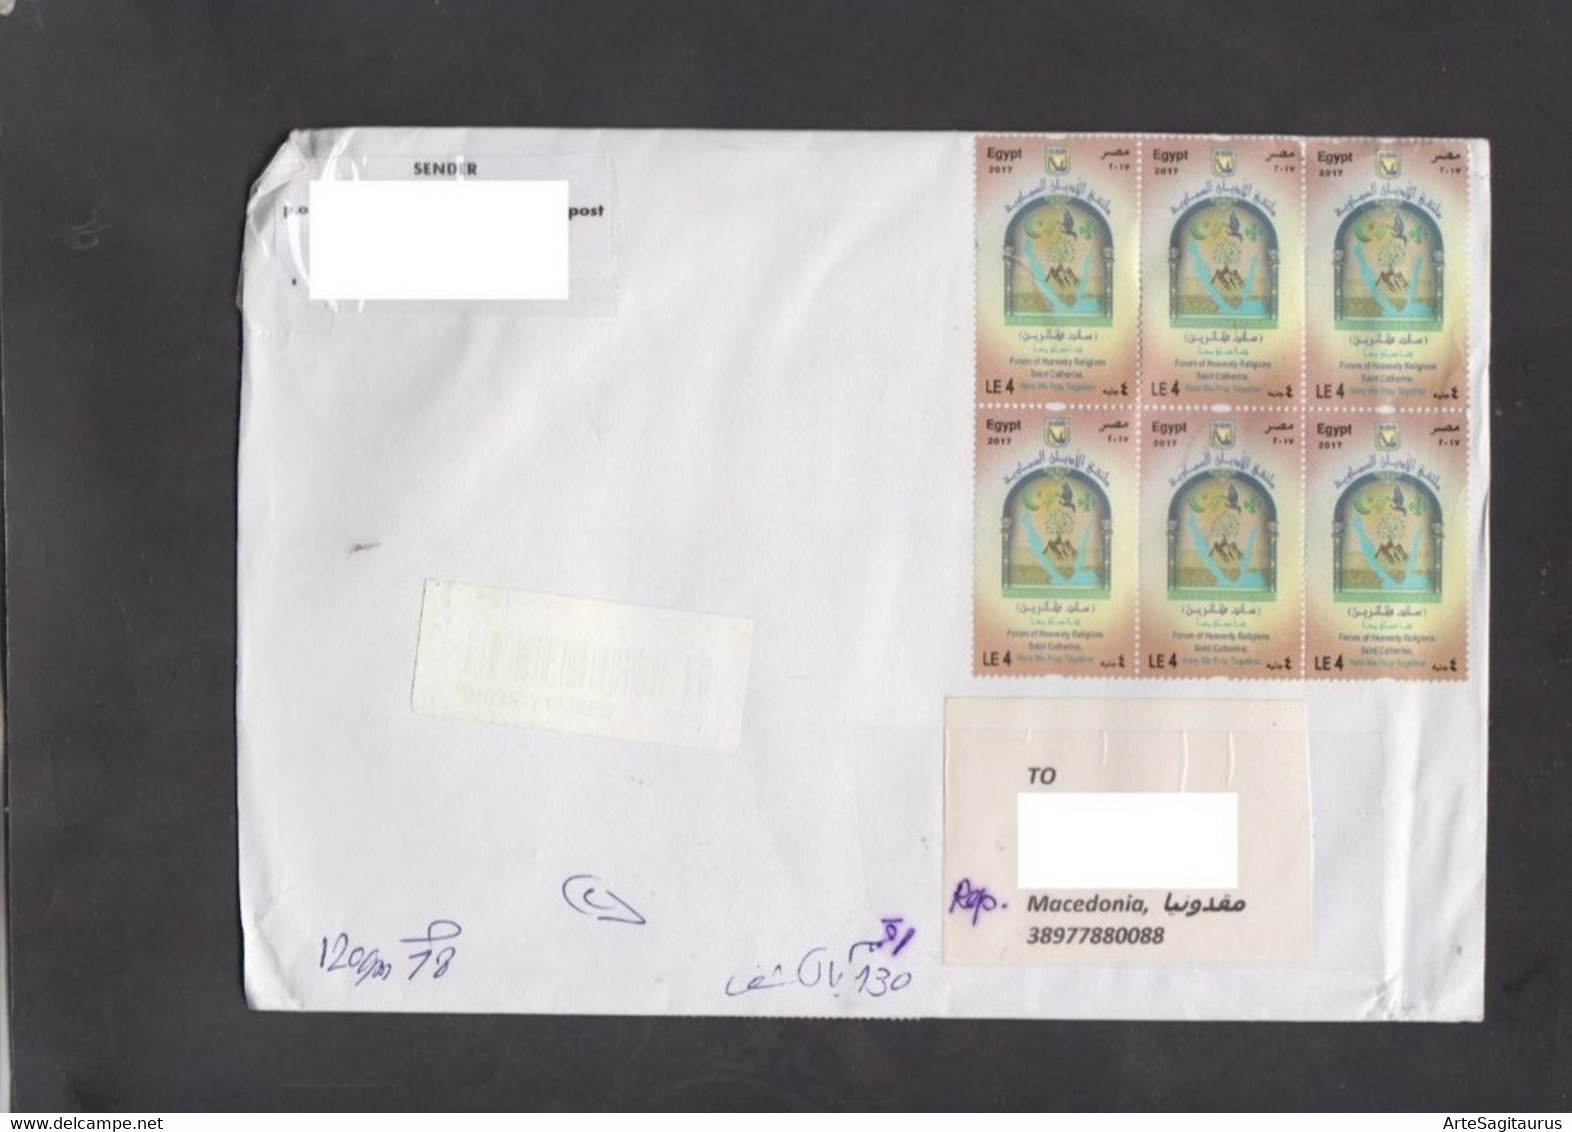 EGYPT, R-COVER, REPUBLIC OF MACEDONIA, Religion, Islam  (002) - Briefe U. Dokumente